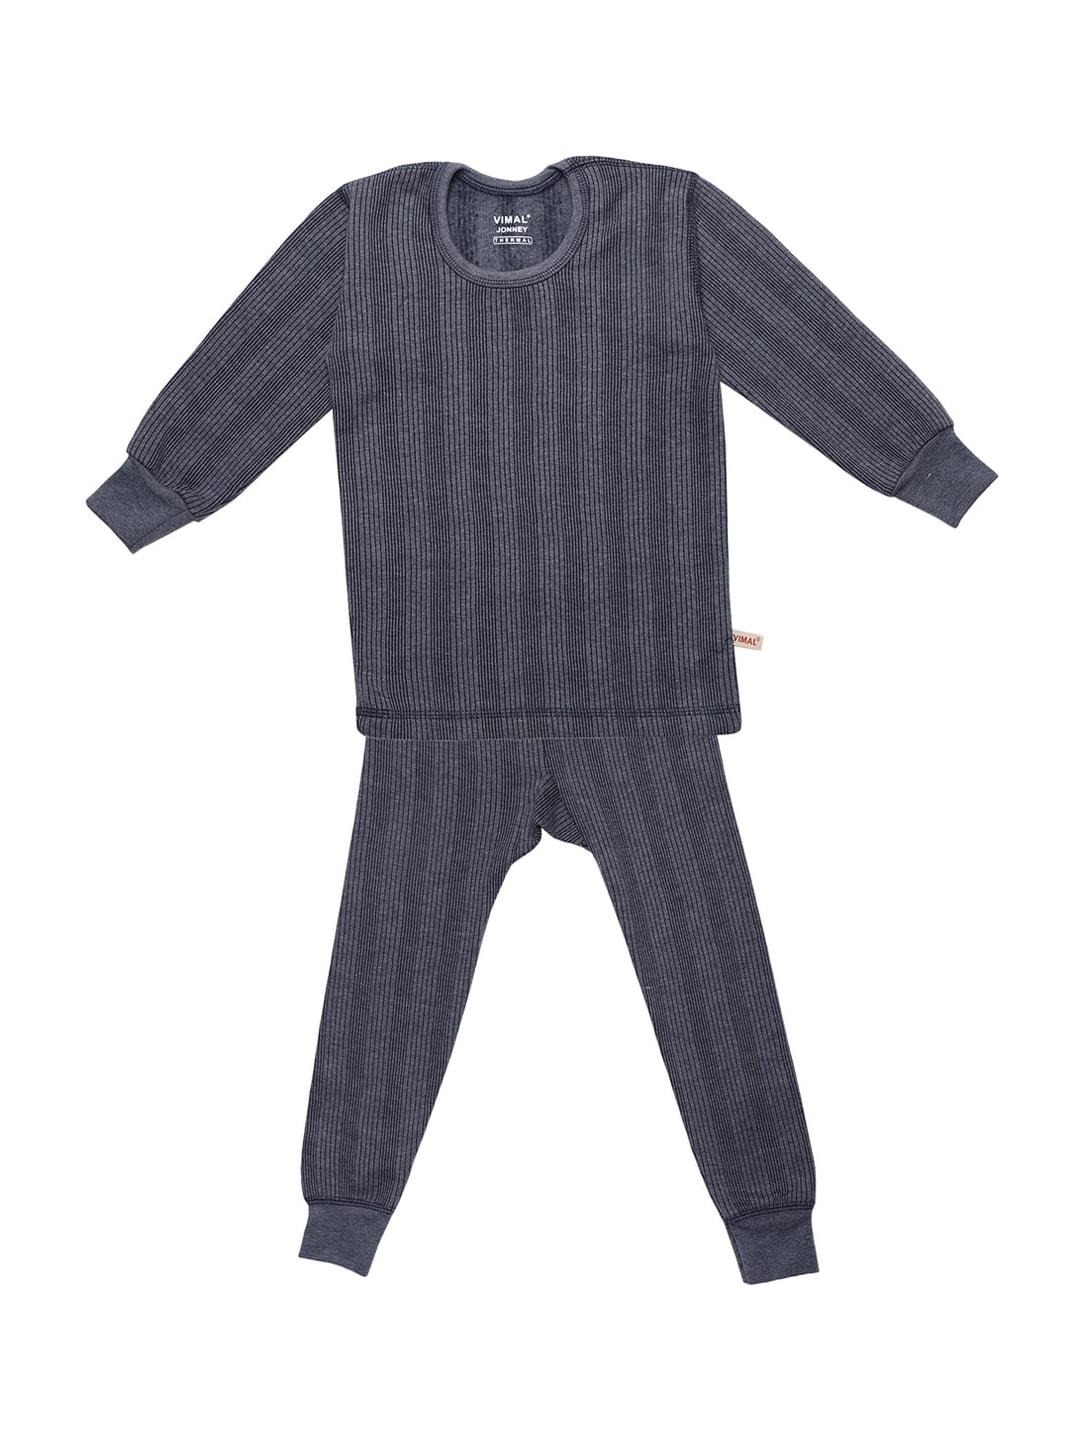 vimal-jonney-kids-striped-cotton-thermal-sets